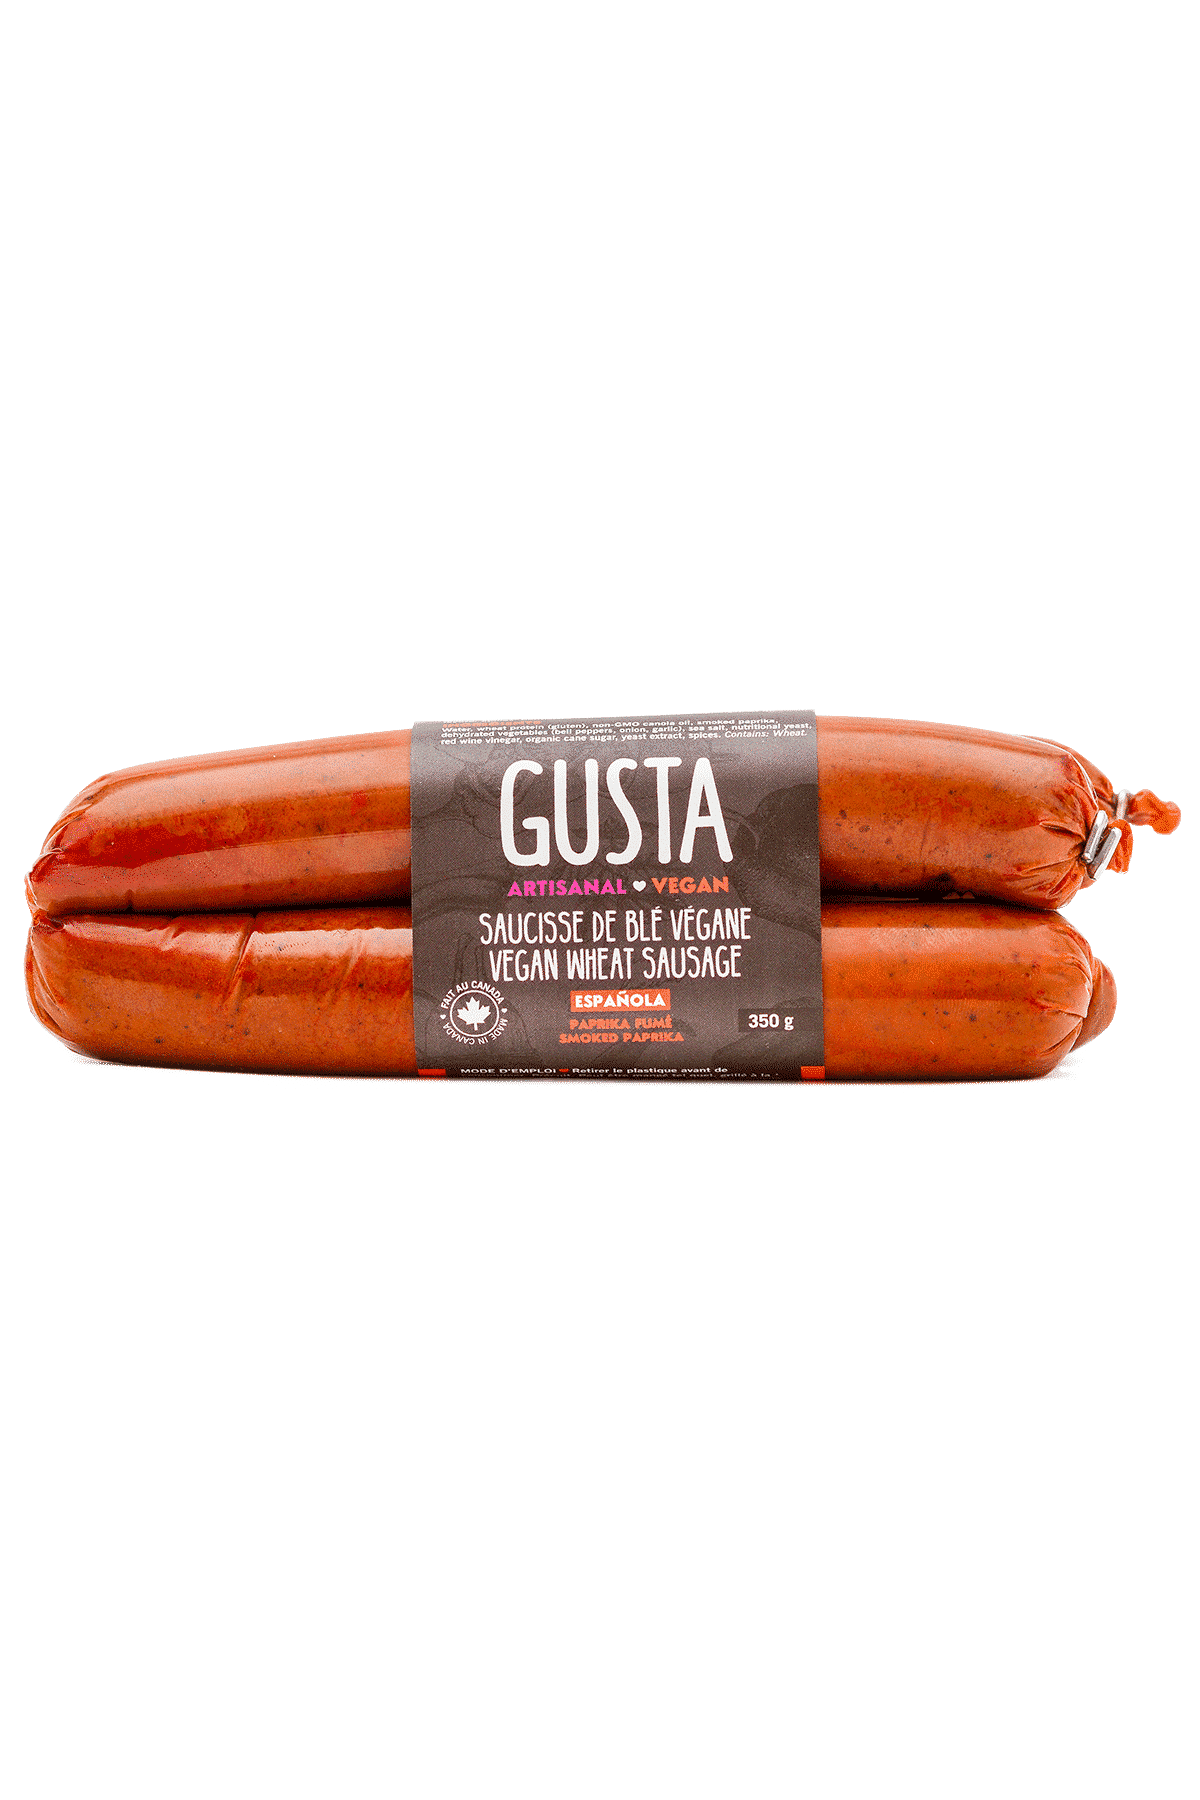 Gusta Vegan Wheat Sausage - Española 350g